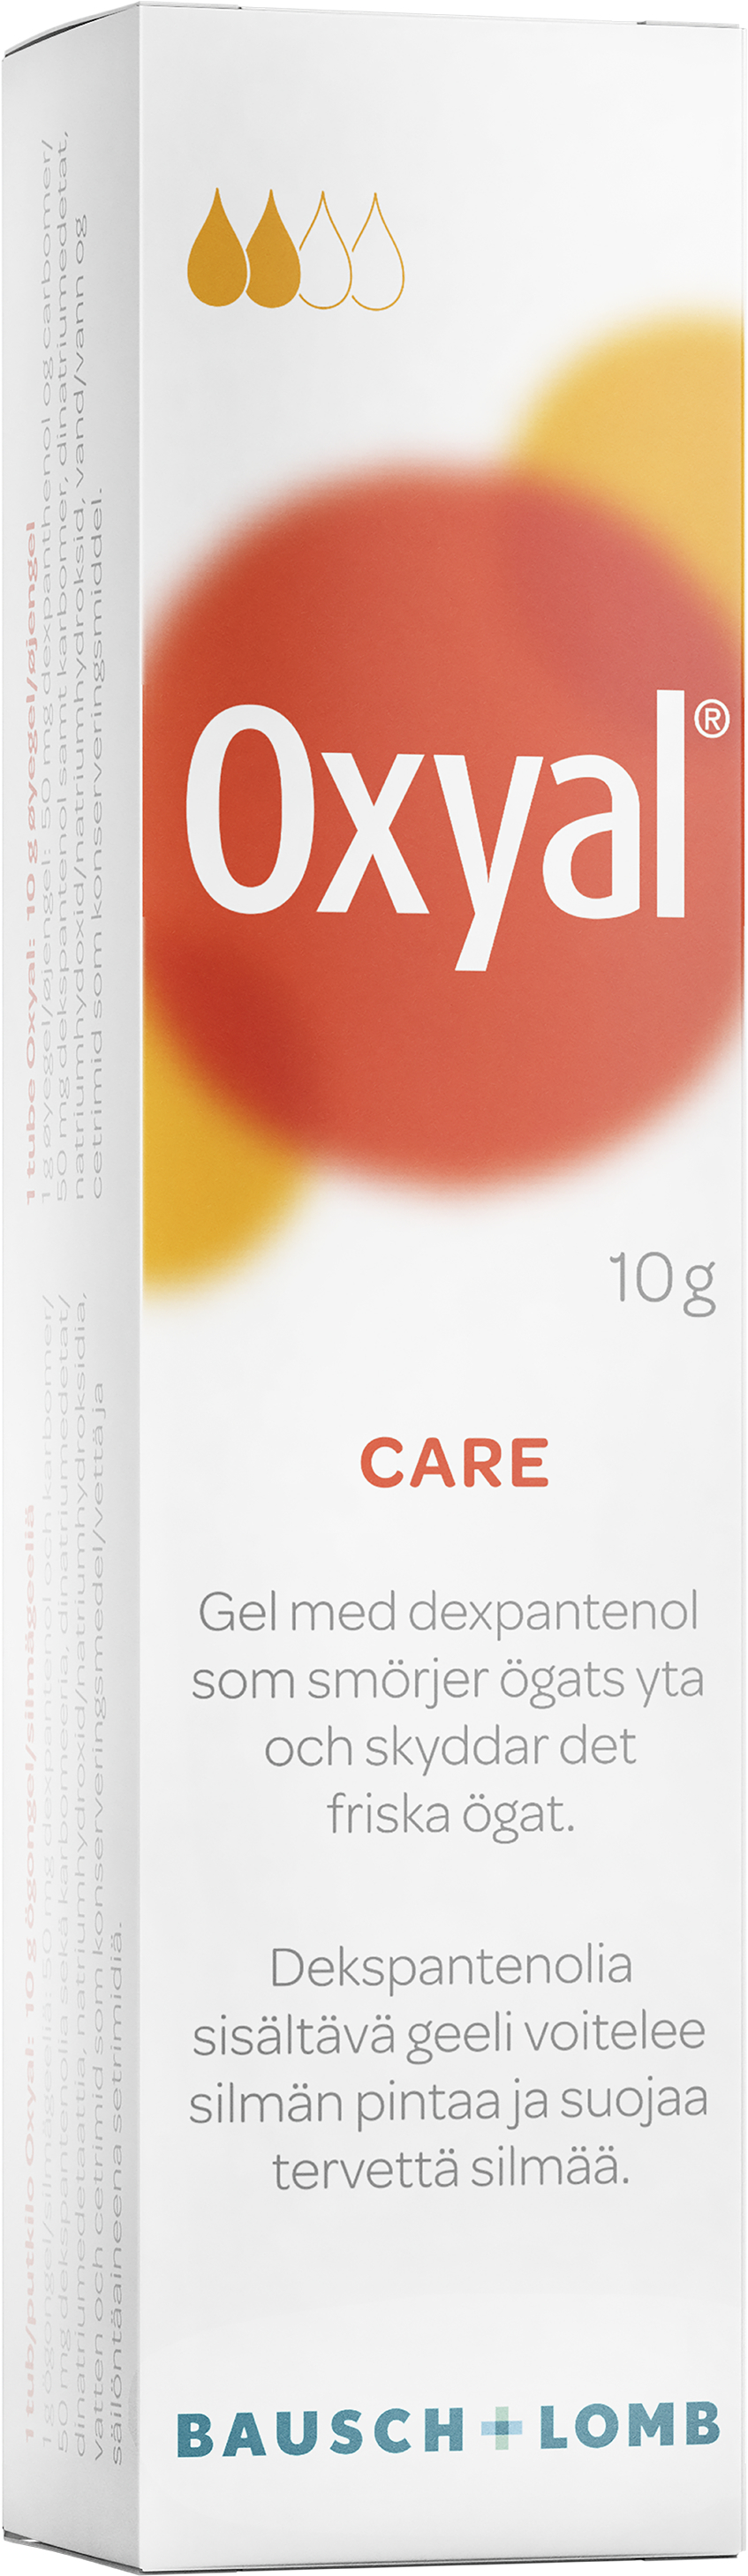 Oxyal Care gel 10 g